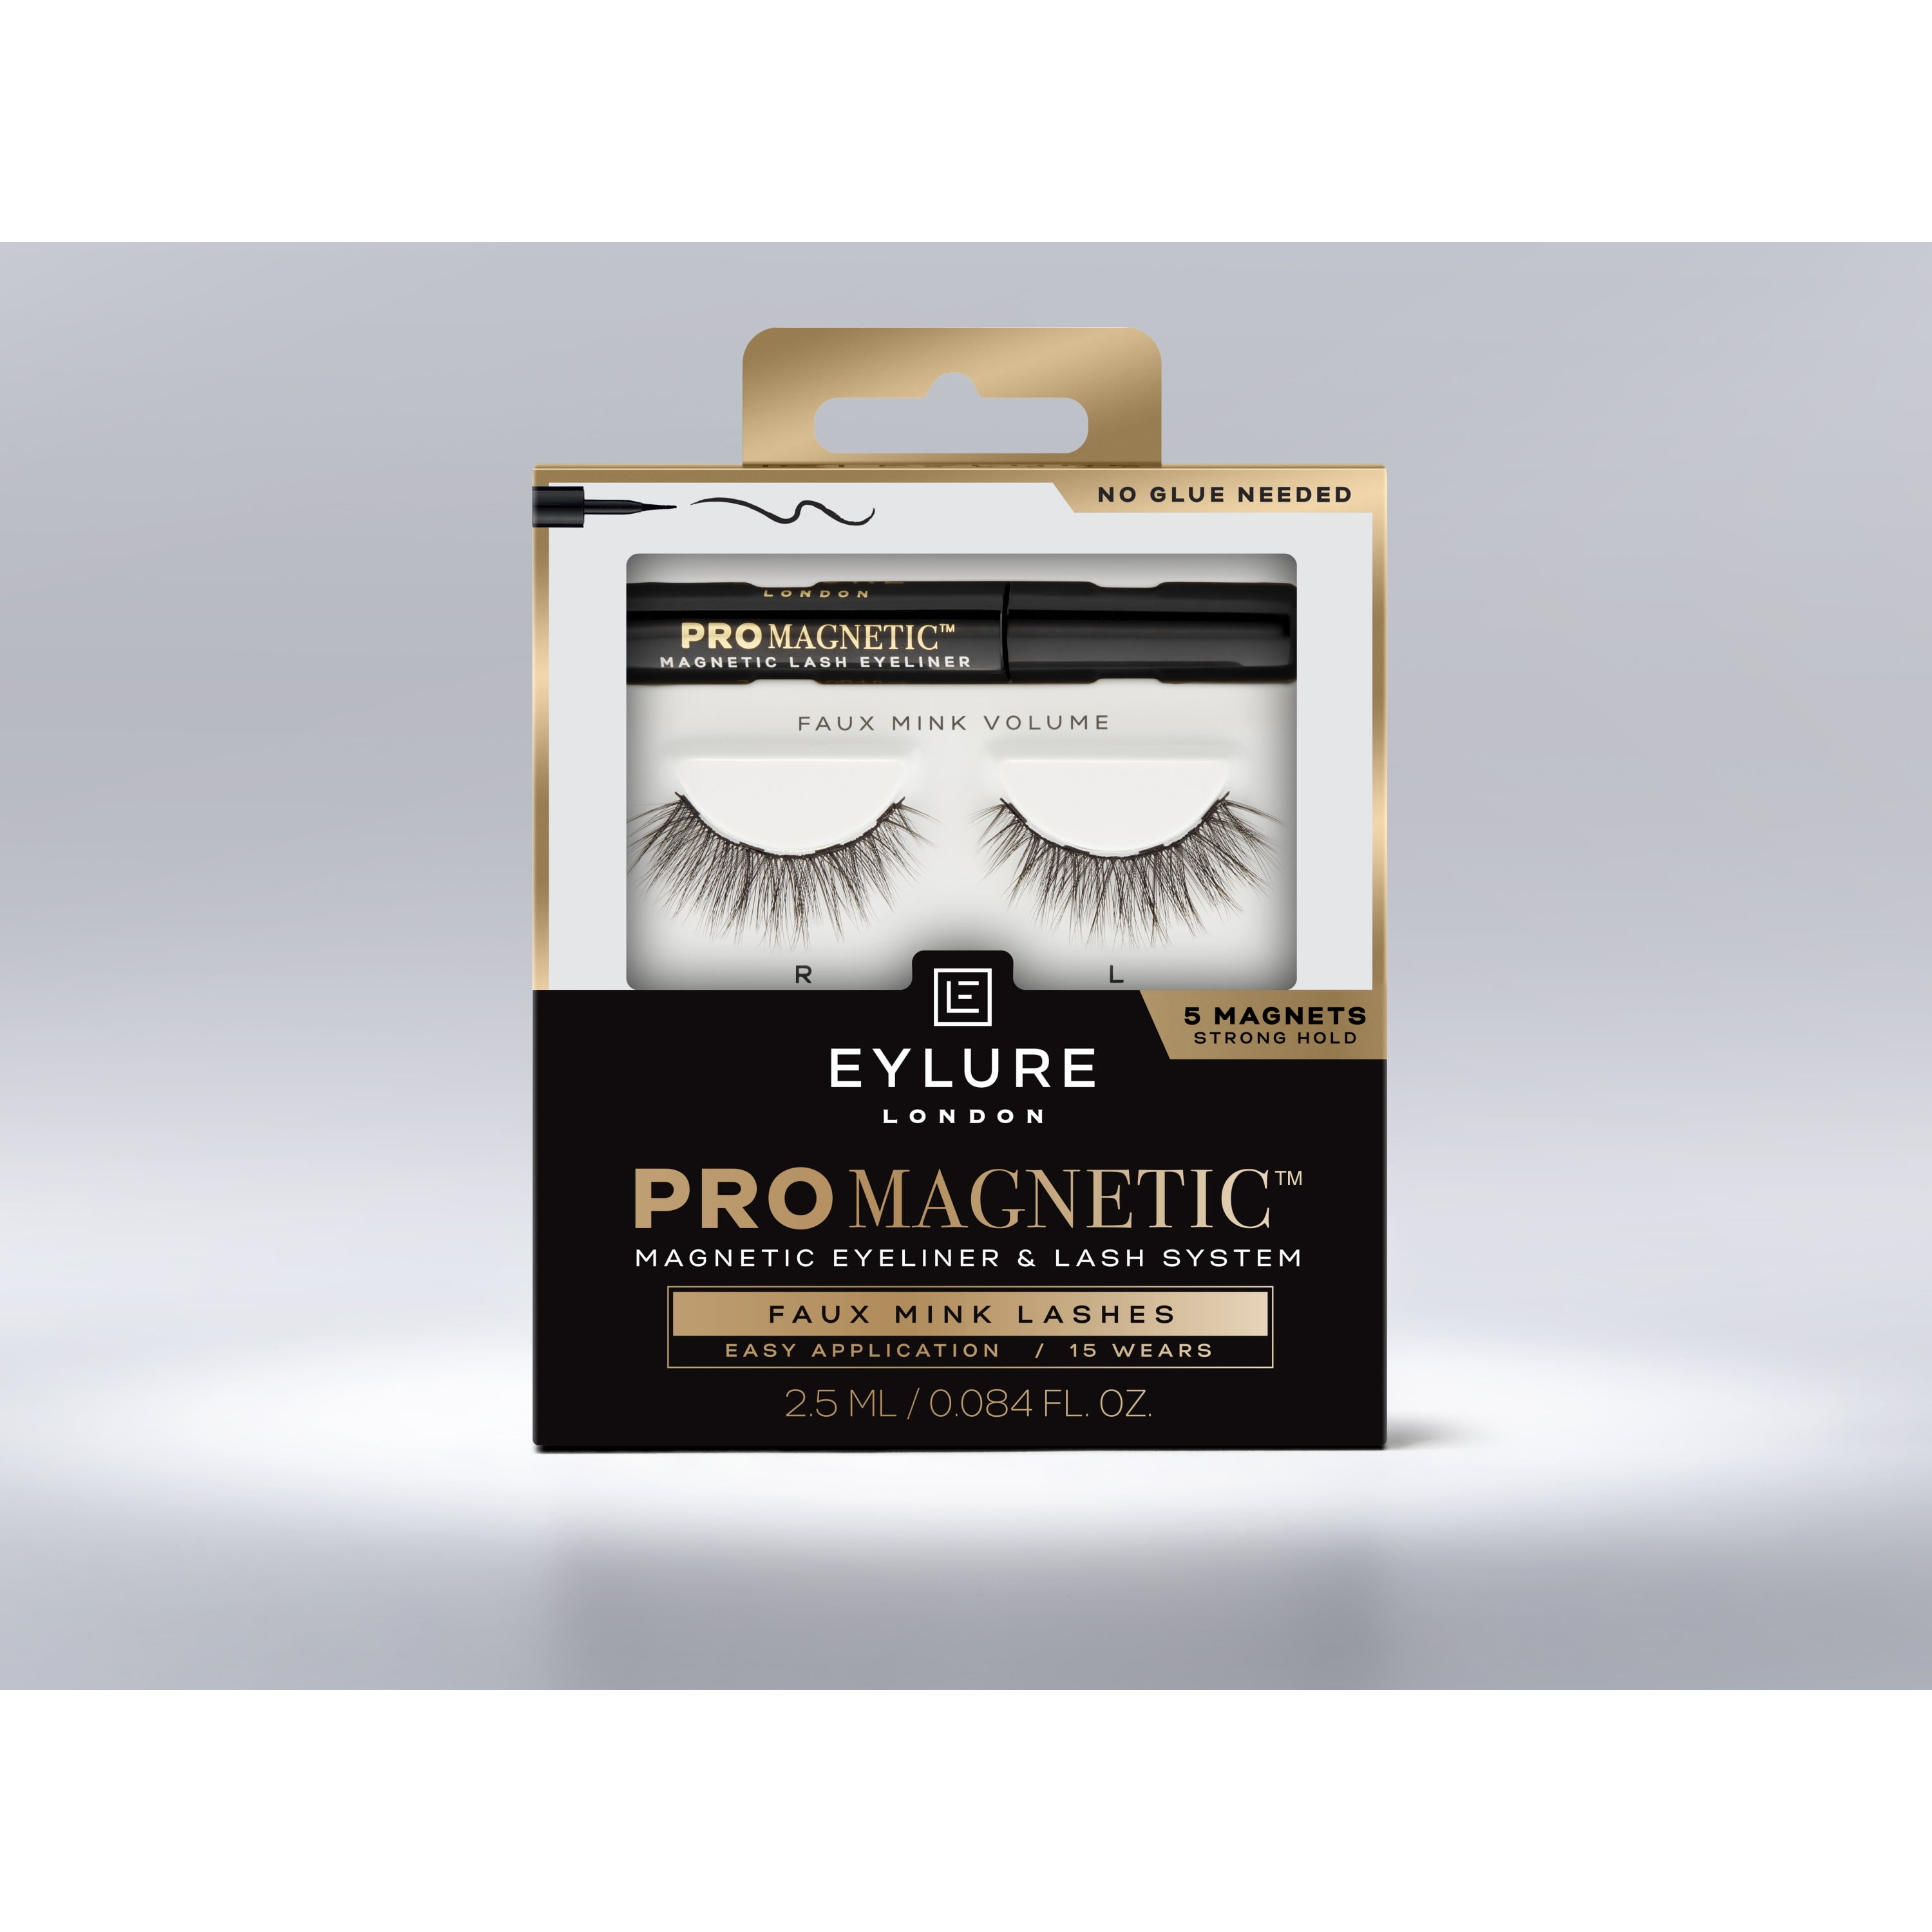 PROMAGNETIC Eyeliner & Lash Kit, Faux Mink Volume, Black -